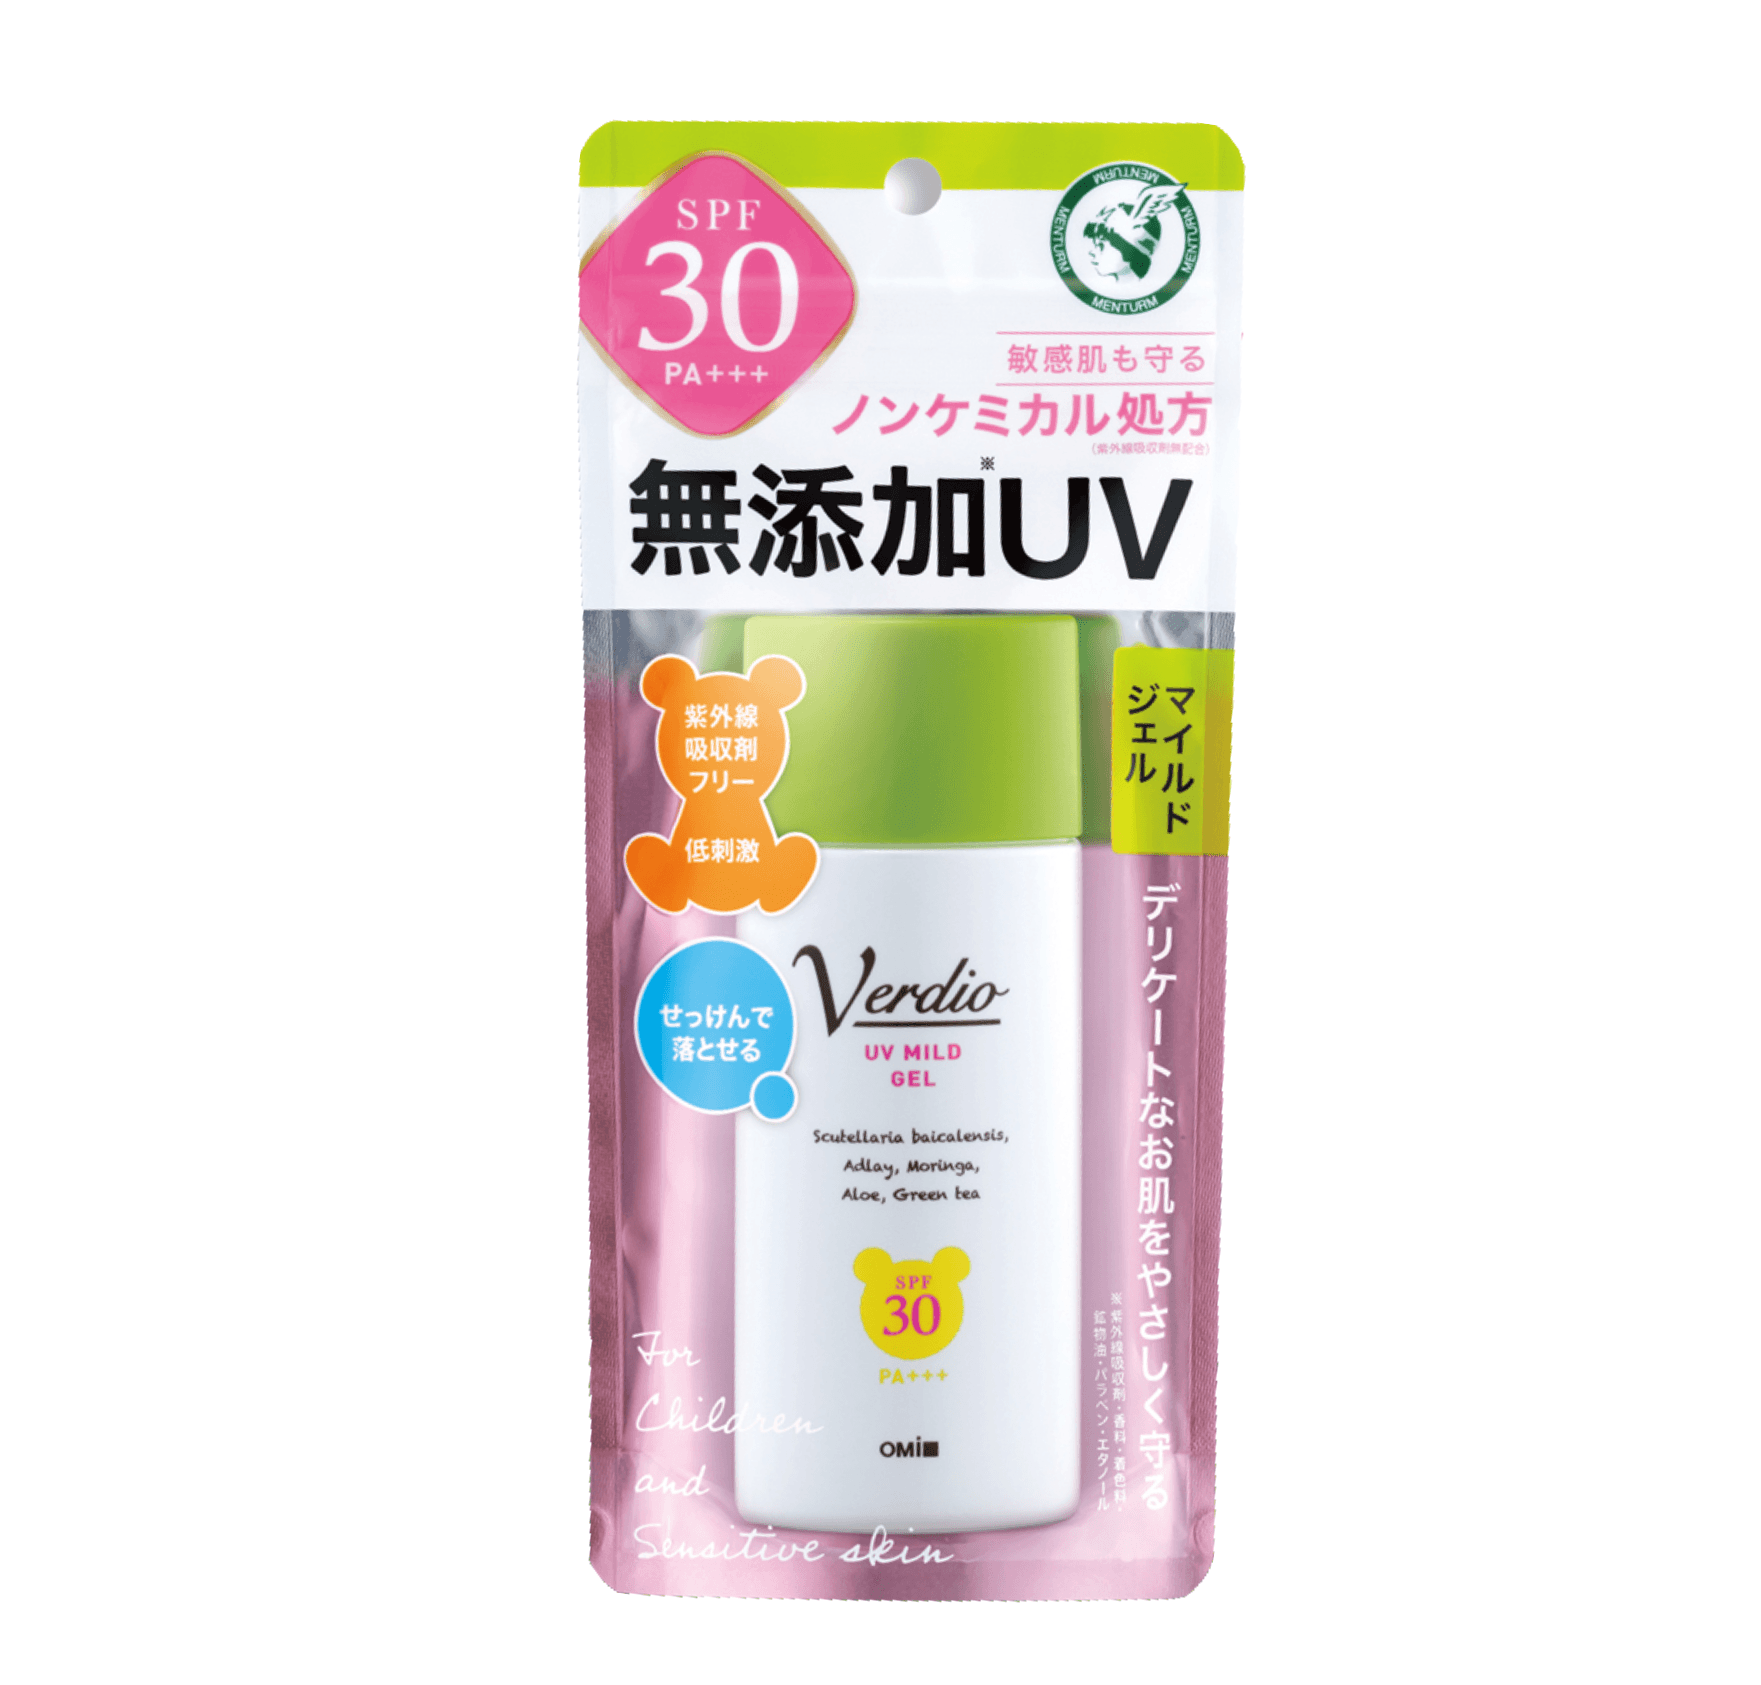 Verdio UV Mild Gel Sunscreen SPF 30 for Kids and Sensitive Skin